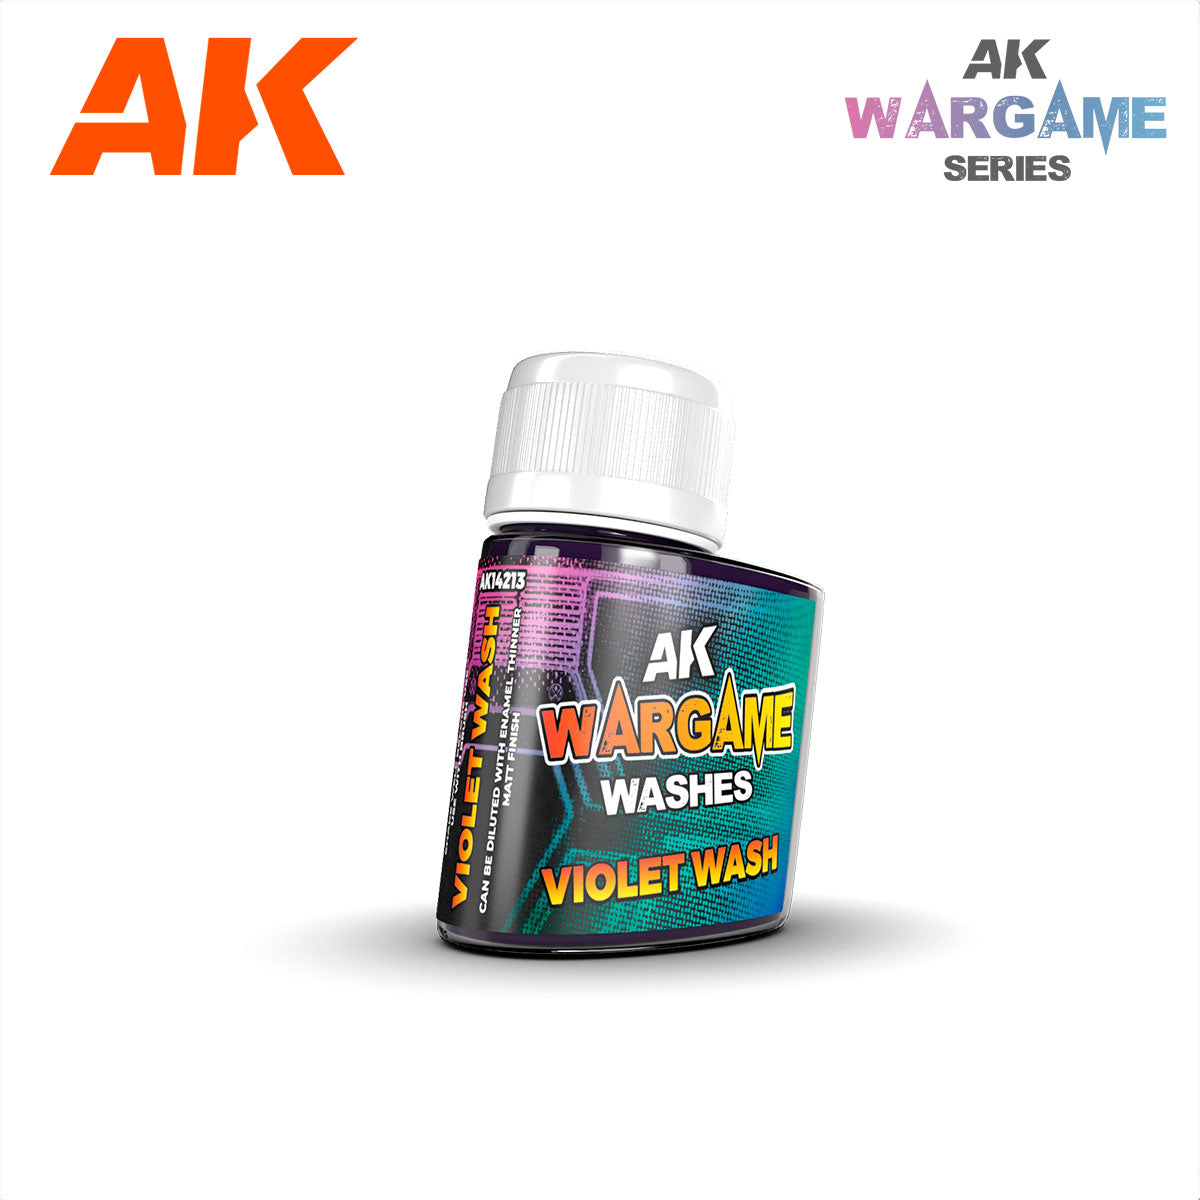 AK14213 - Violet wash (35ml) - Wargame Wash